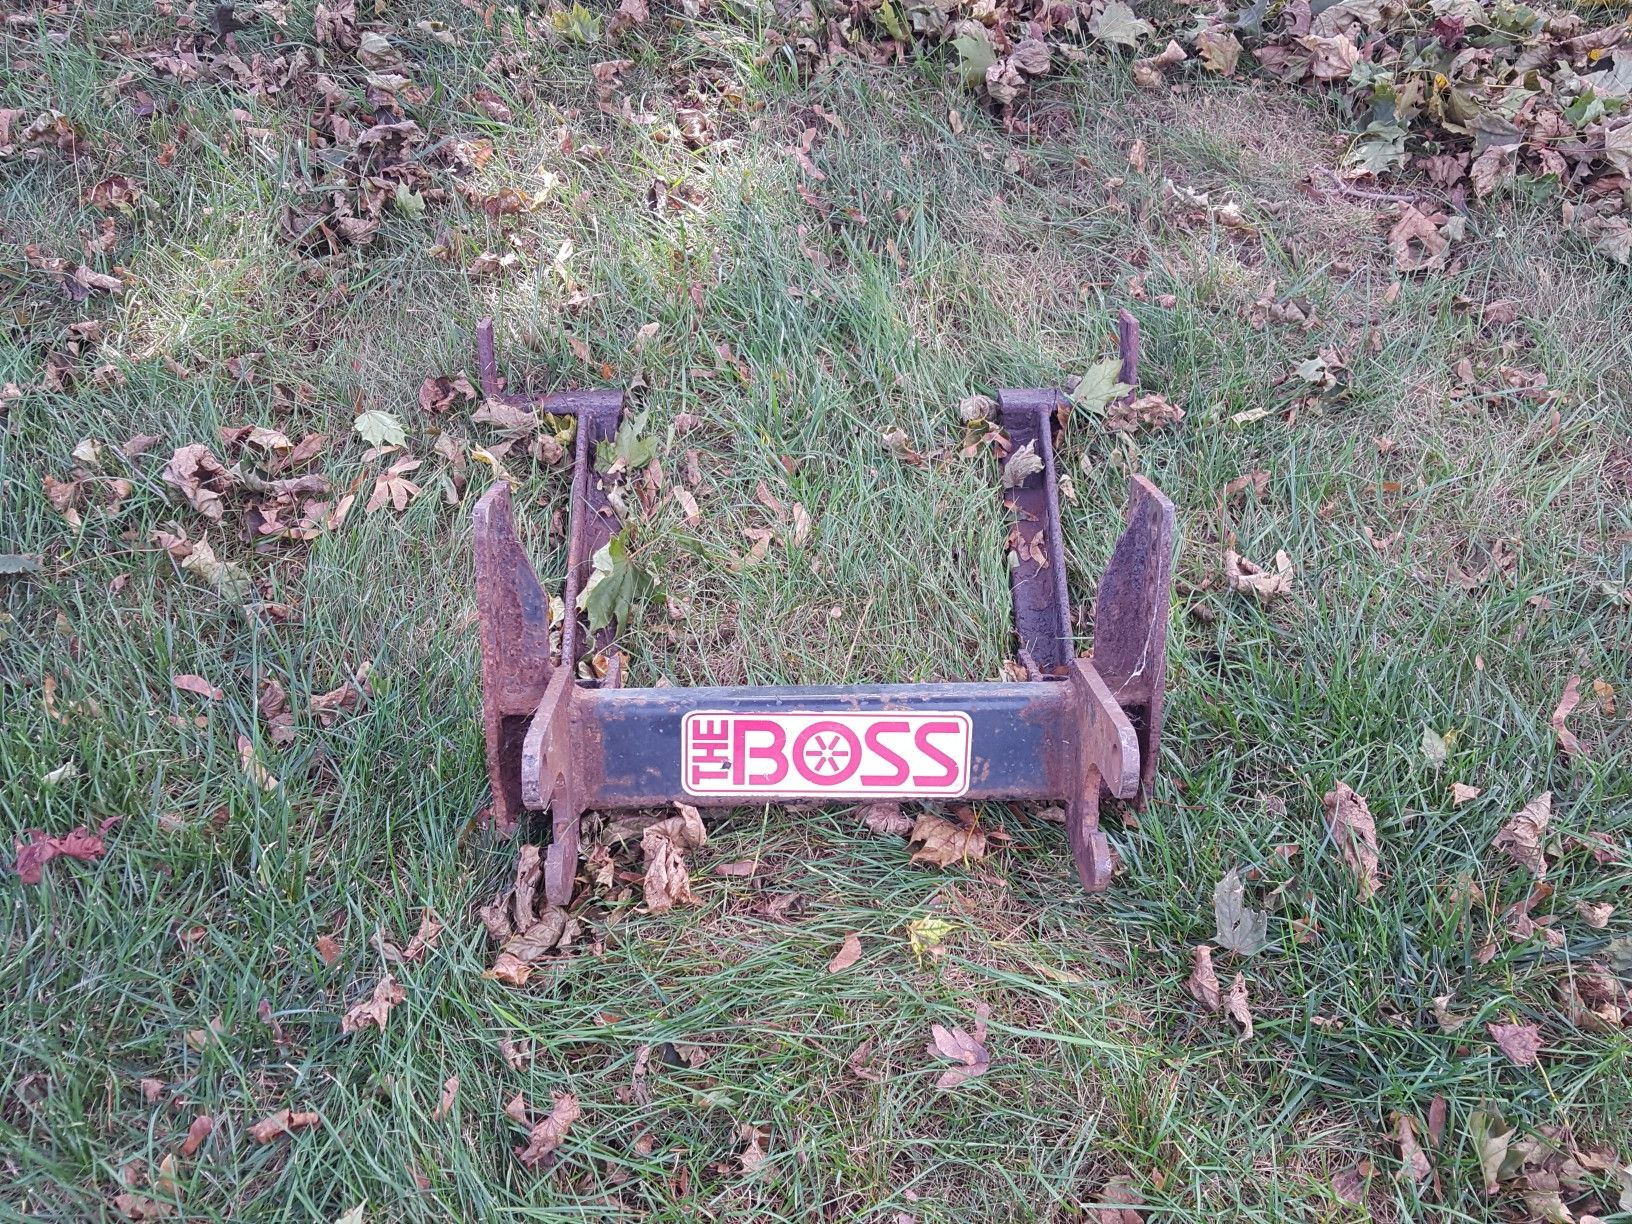 Boss Snow Plow mount